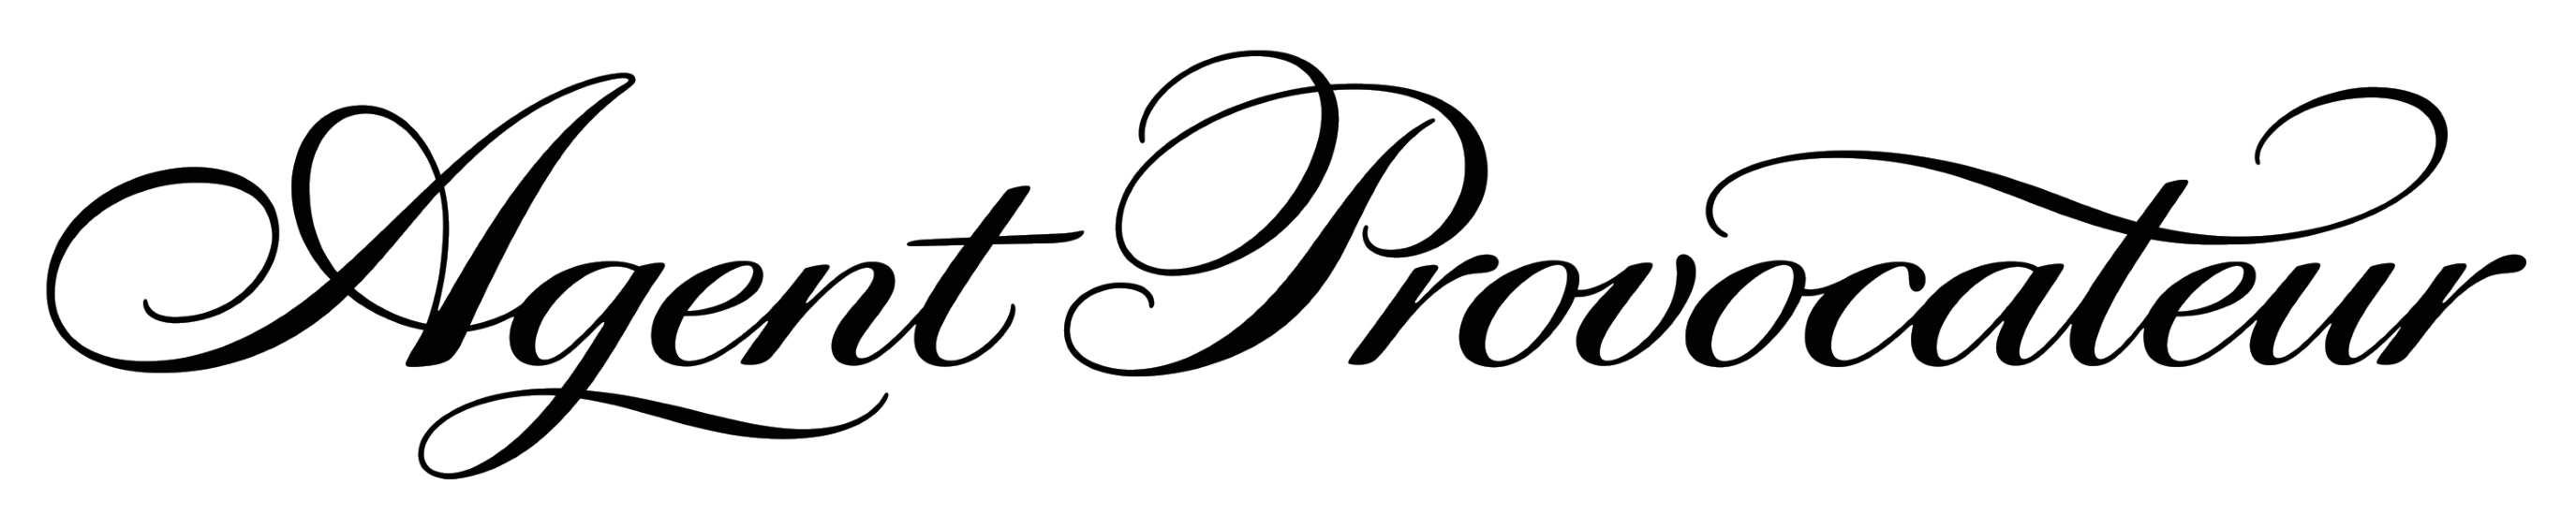 Agent Provocateur logo, logotype